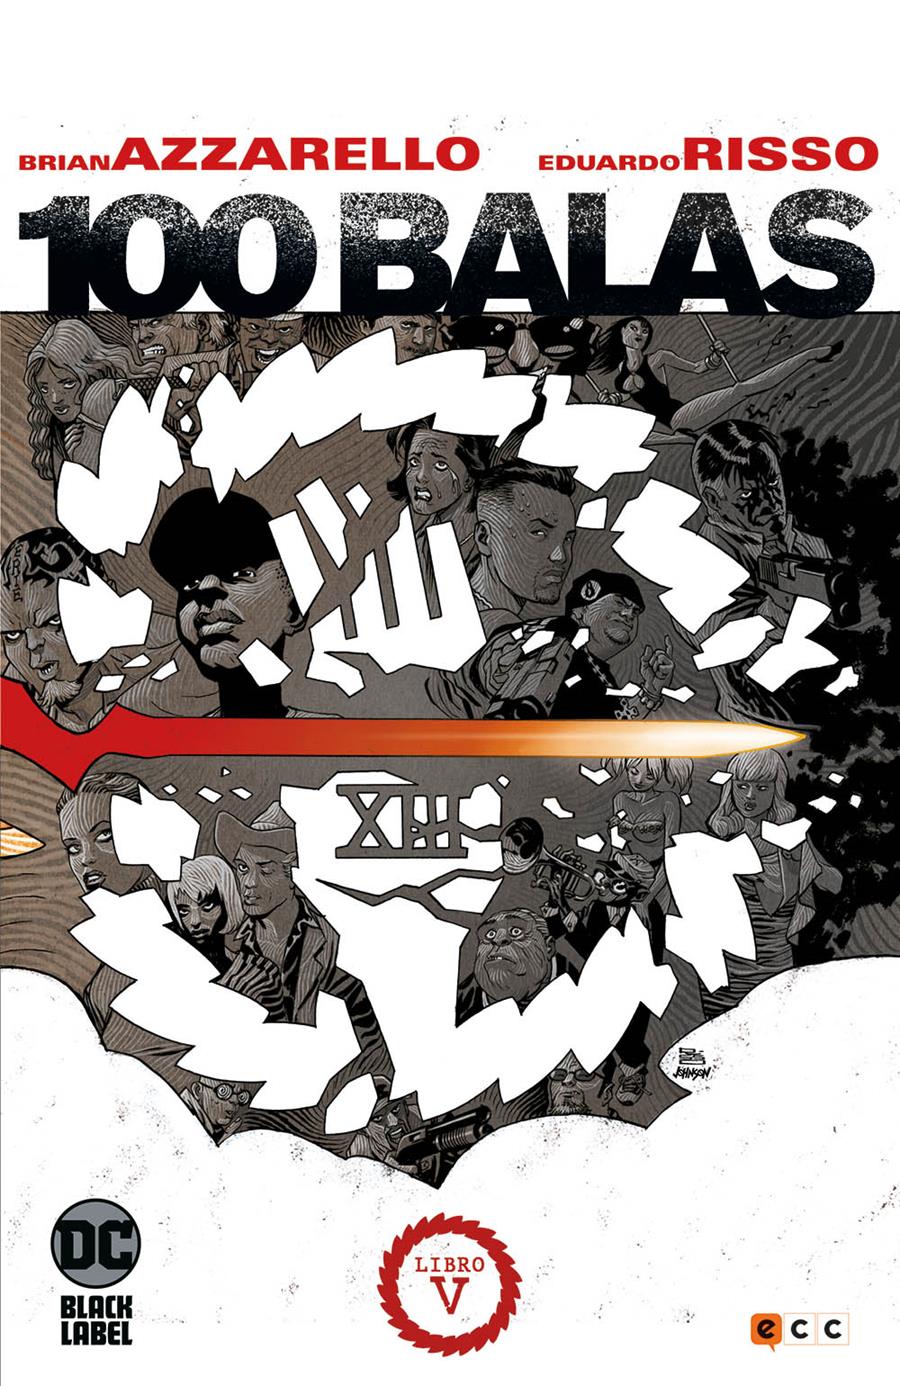 100 Balas Libro 05 de 5 | N0221-ECC35 | Brian Azzarello / Eduardo Risso | Terra de Còmic - Tu tienda de cómics online especializada en cómics, manga y merchandising